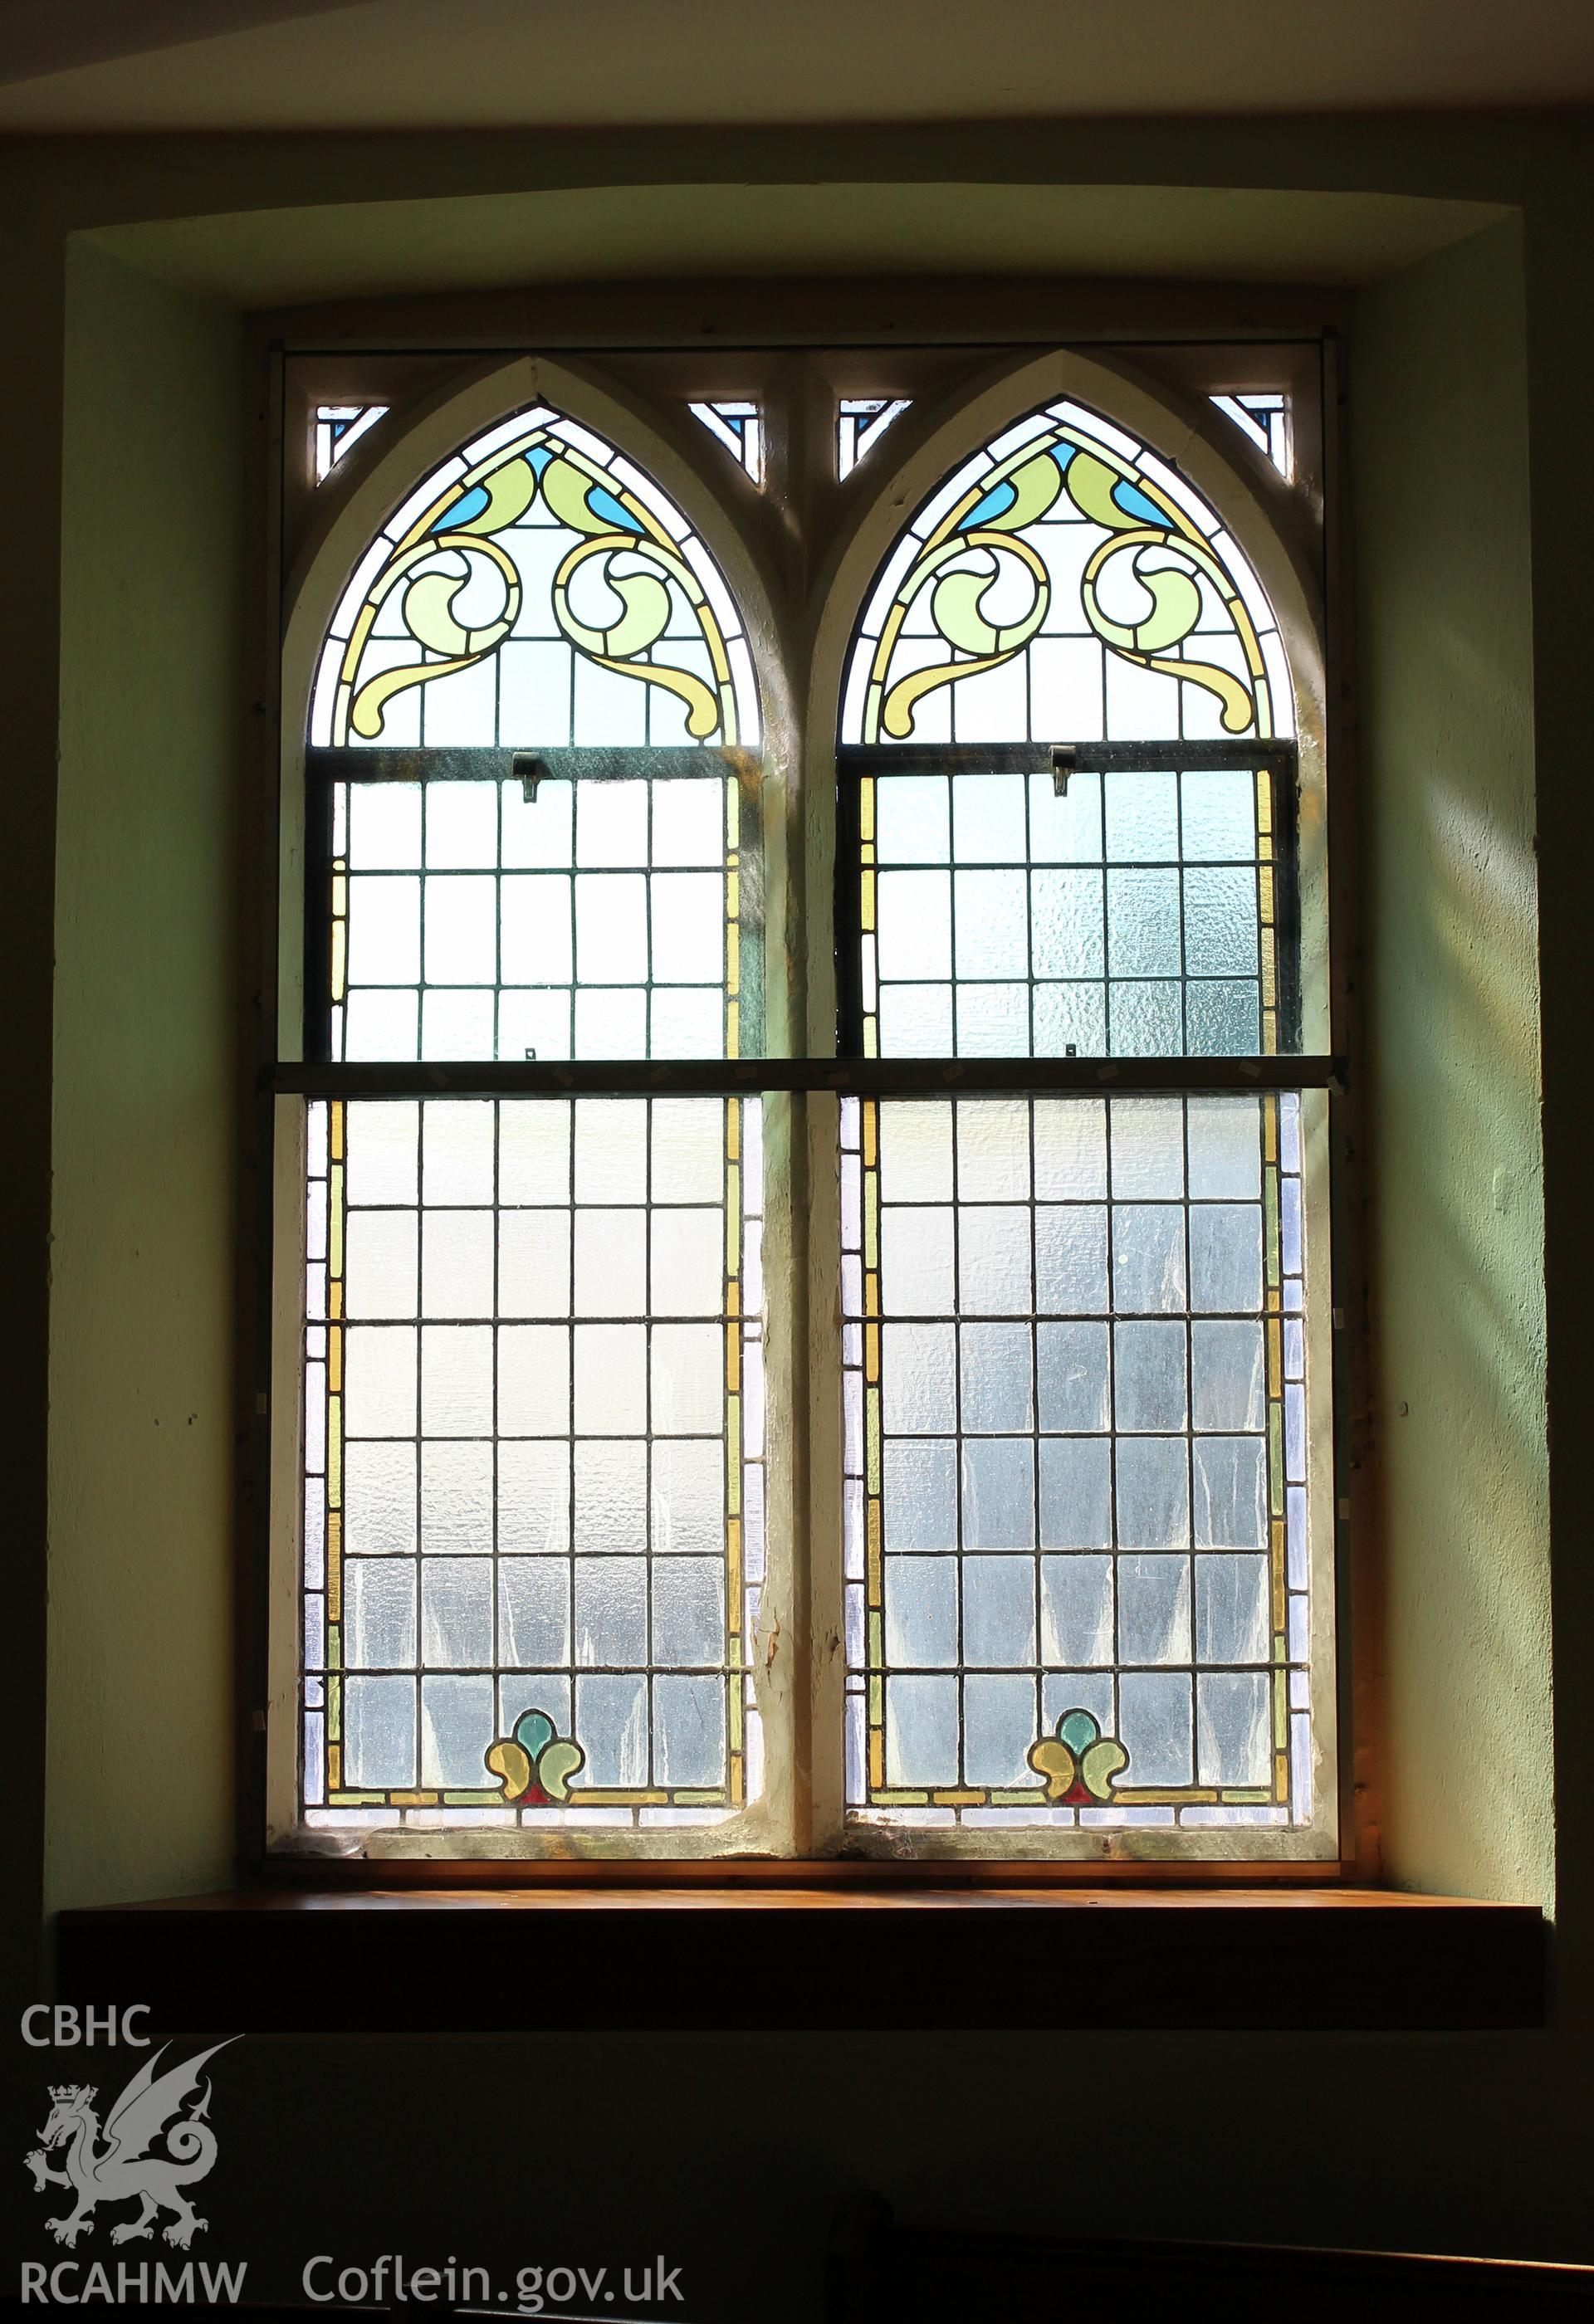 Interior of Hope Baptist Chapel, detail of window